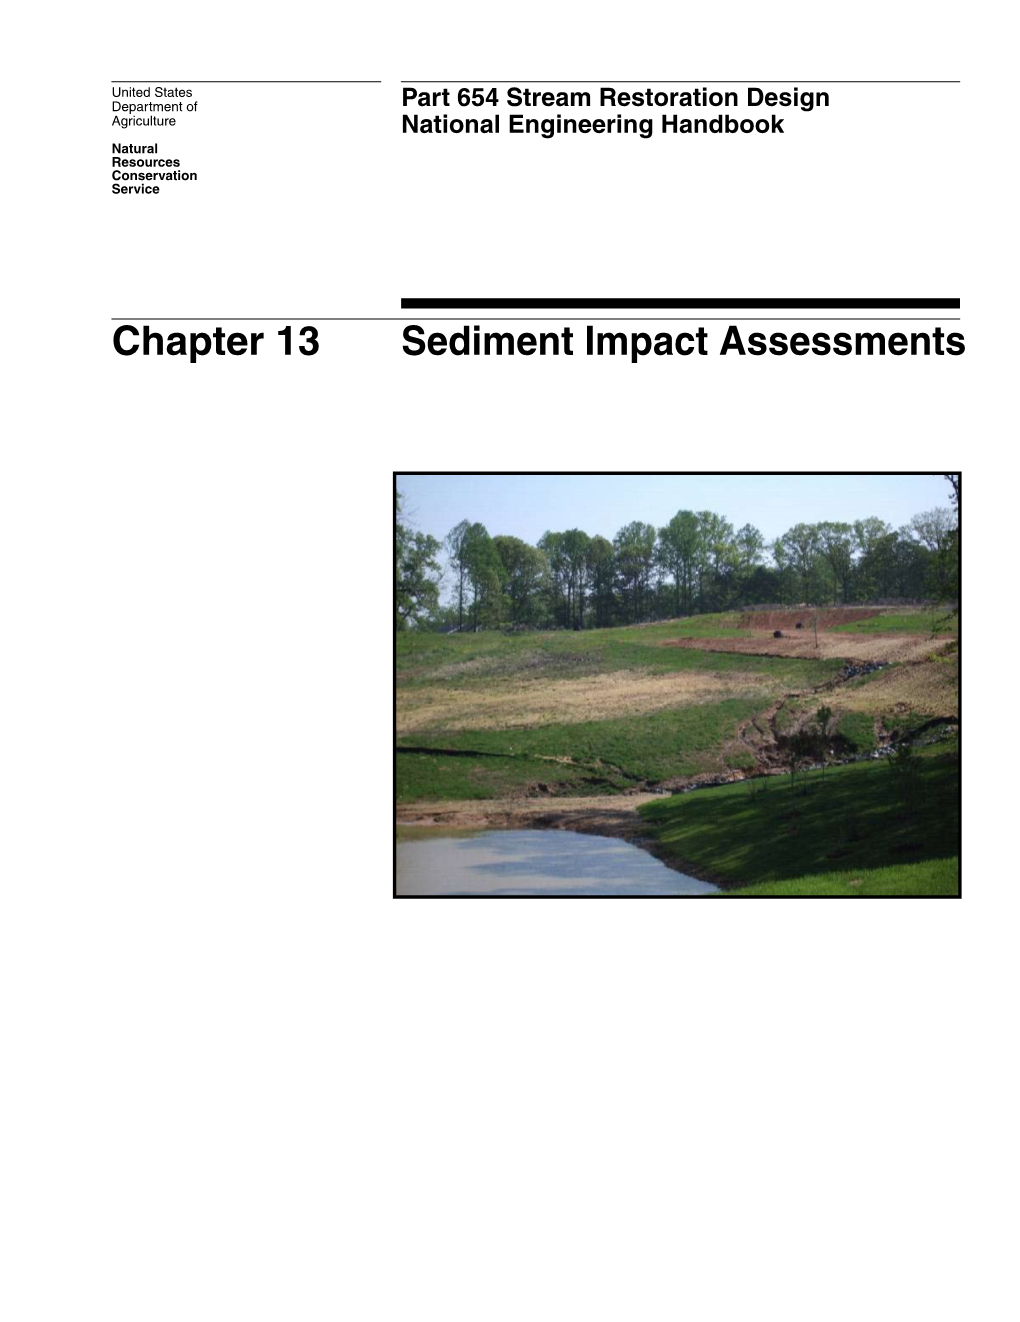 Chapter 13--Sediment Impact Assessments